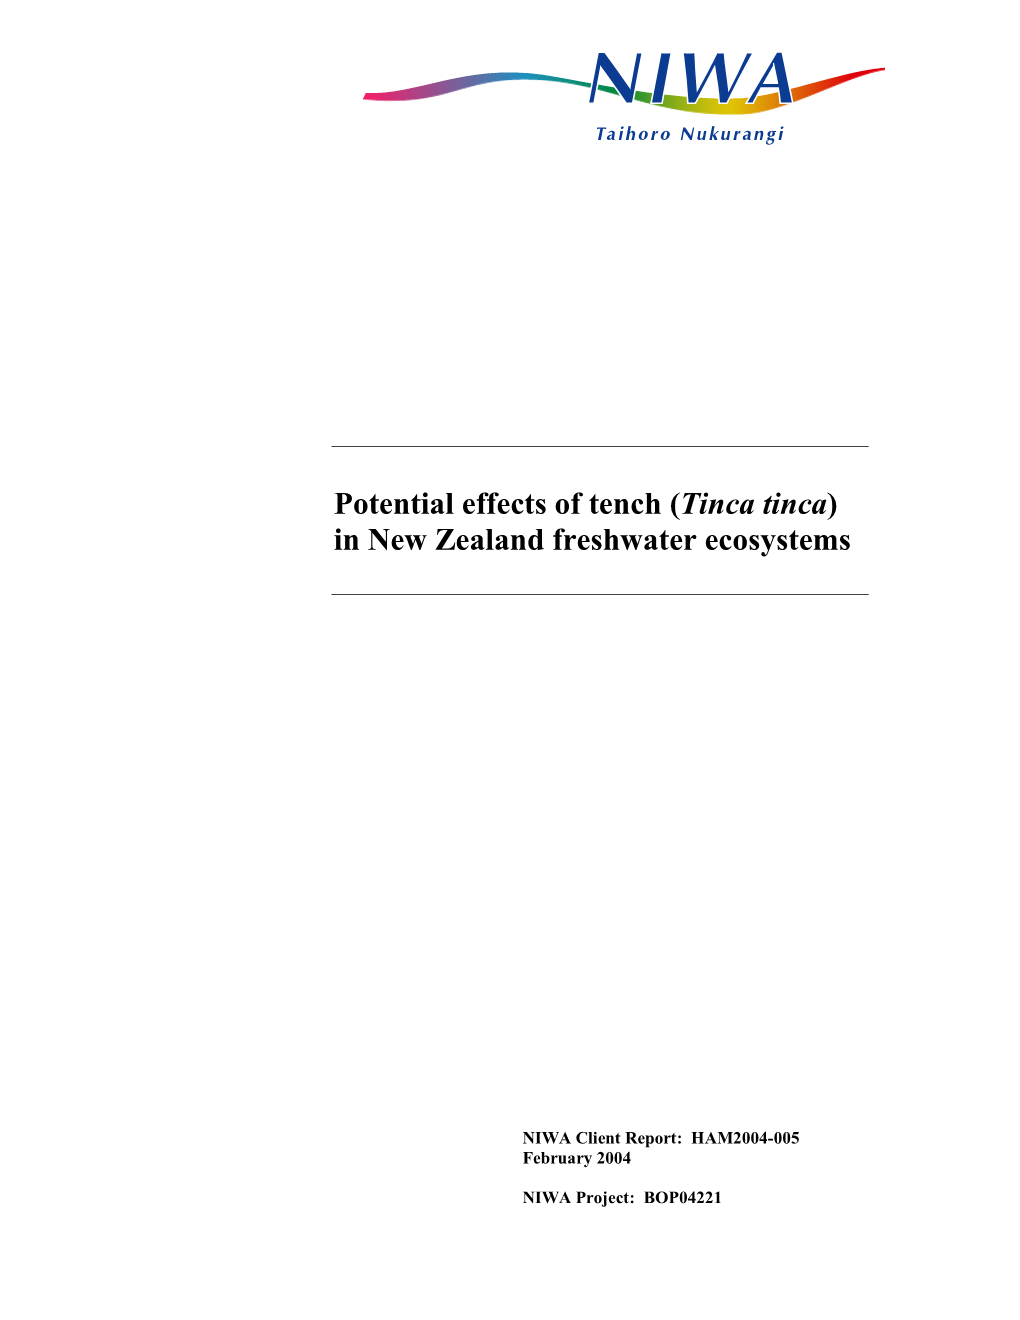 Potential Effects of Tench (Tinca Tinca) in New Zealand Freshwater